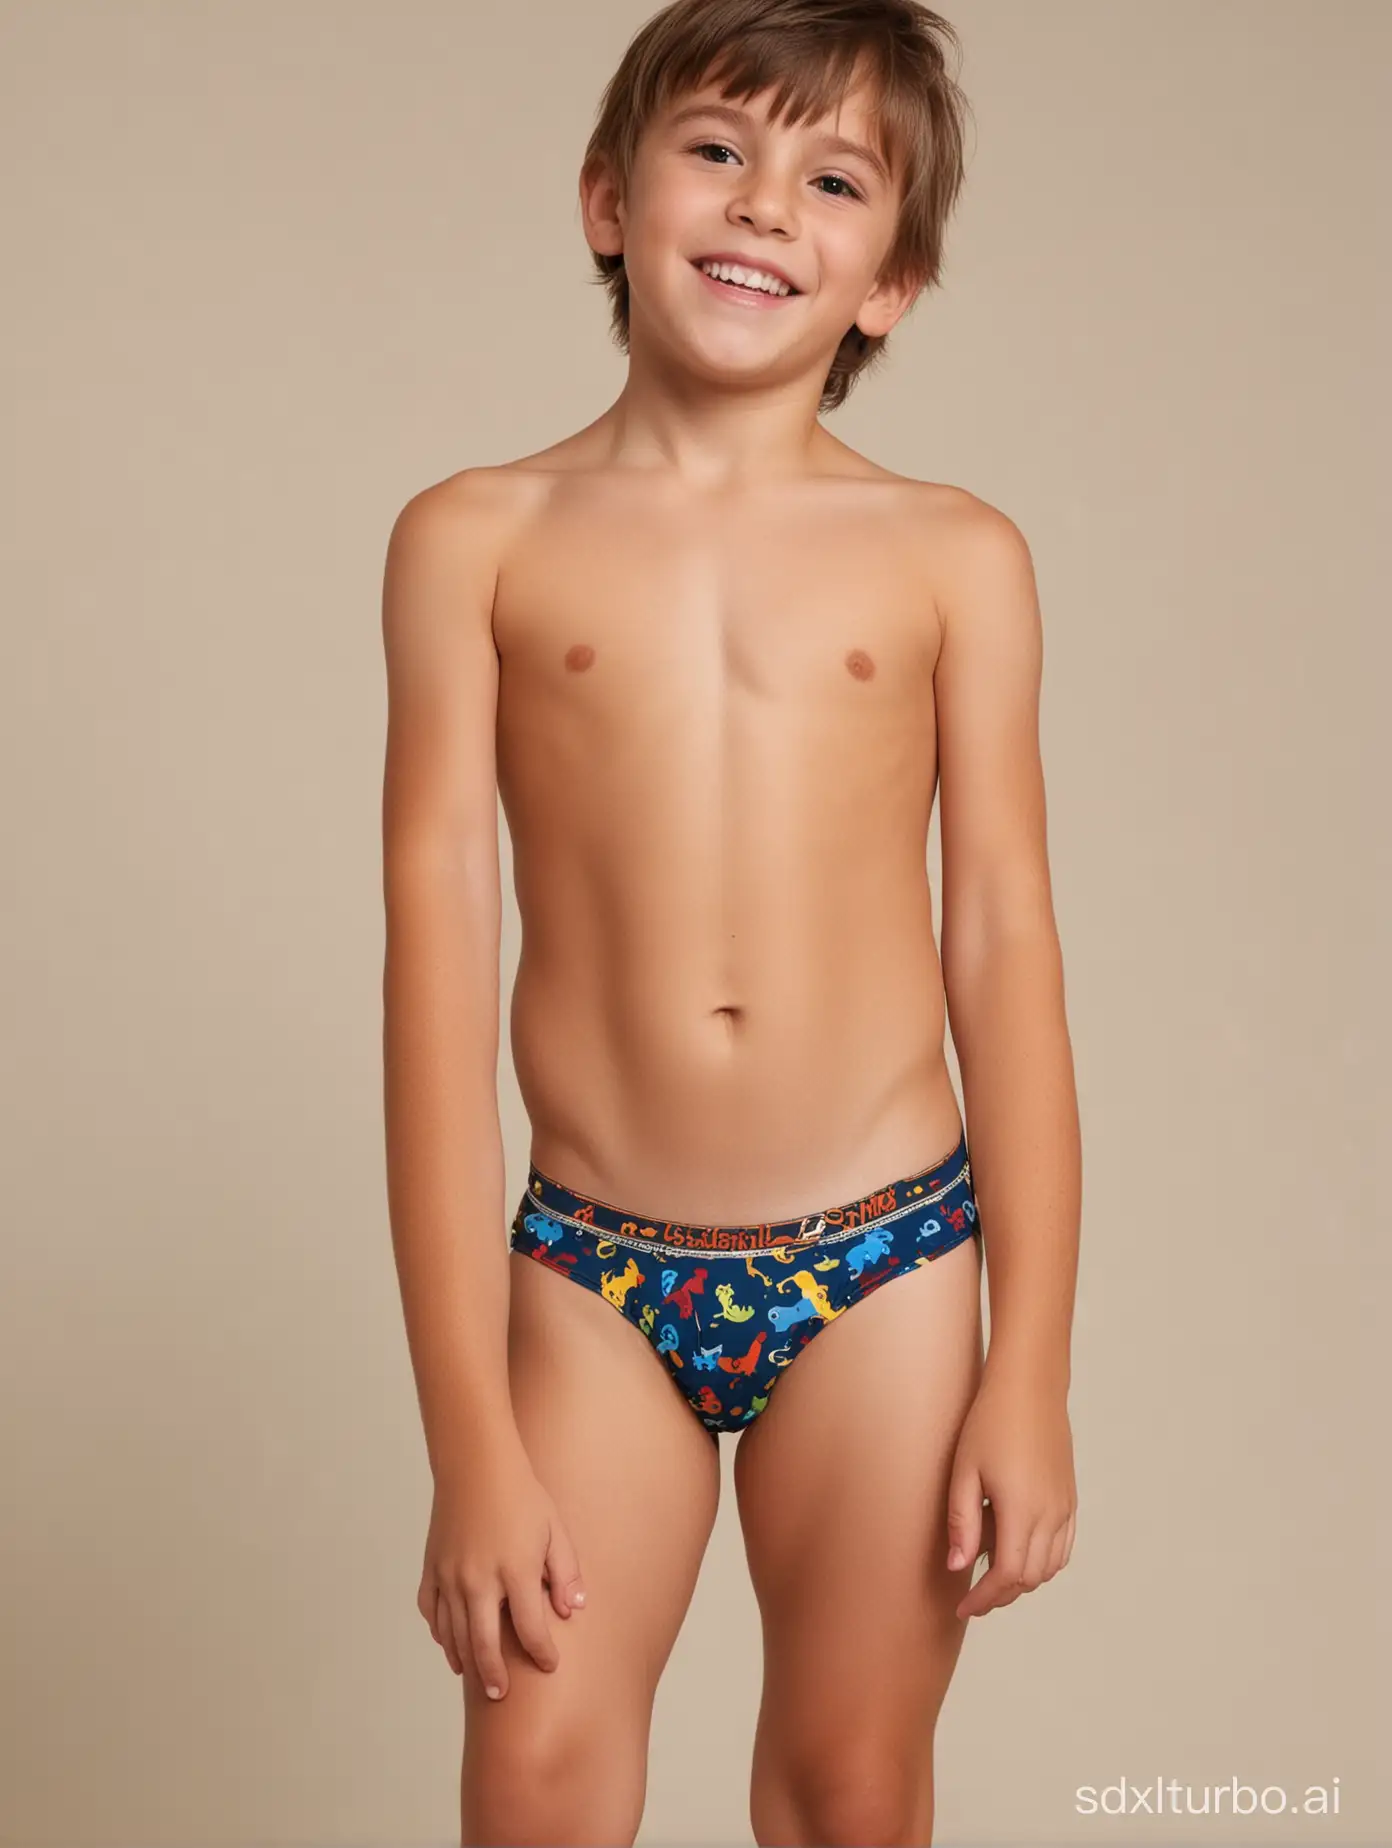 Playful-Little-Boys-in-Underwear